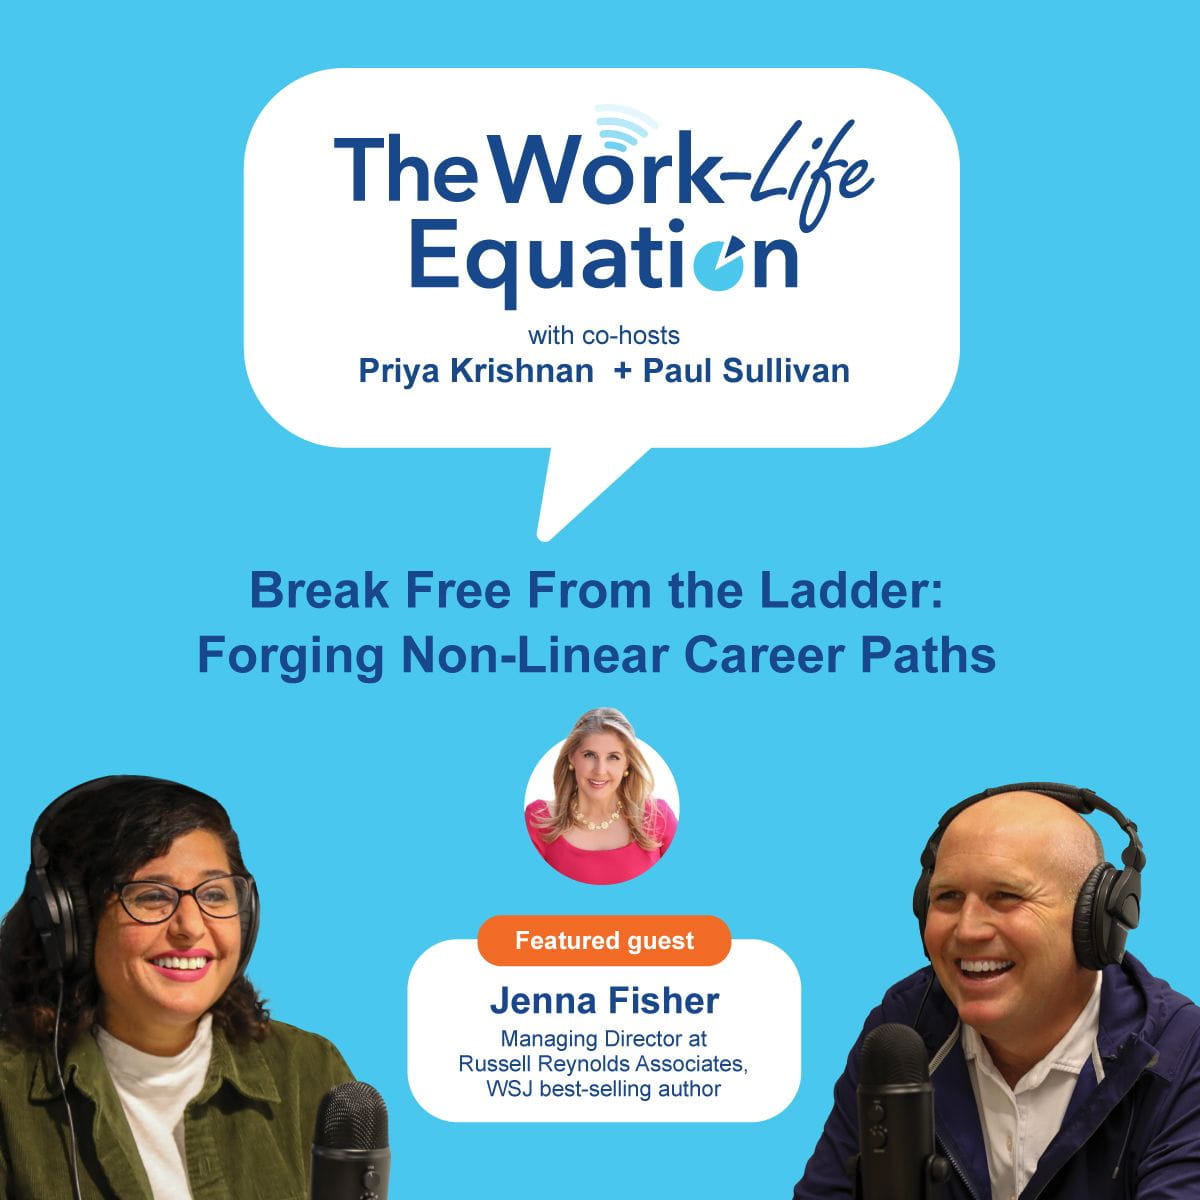 Jenna Fisher joins Priya and Paul on The Work-Life Equation podcast